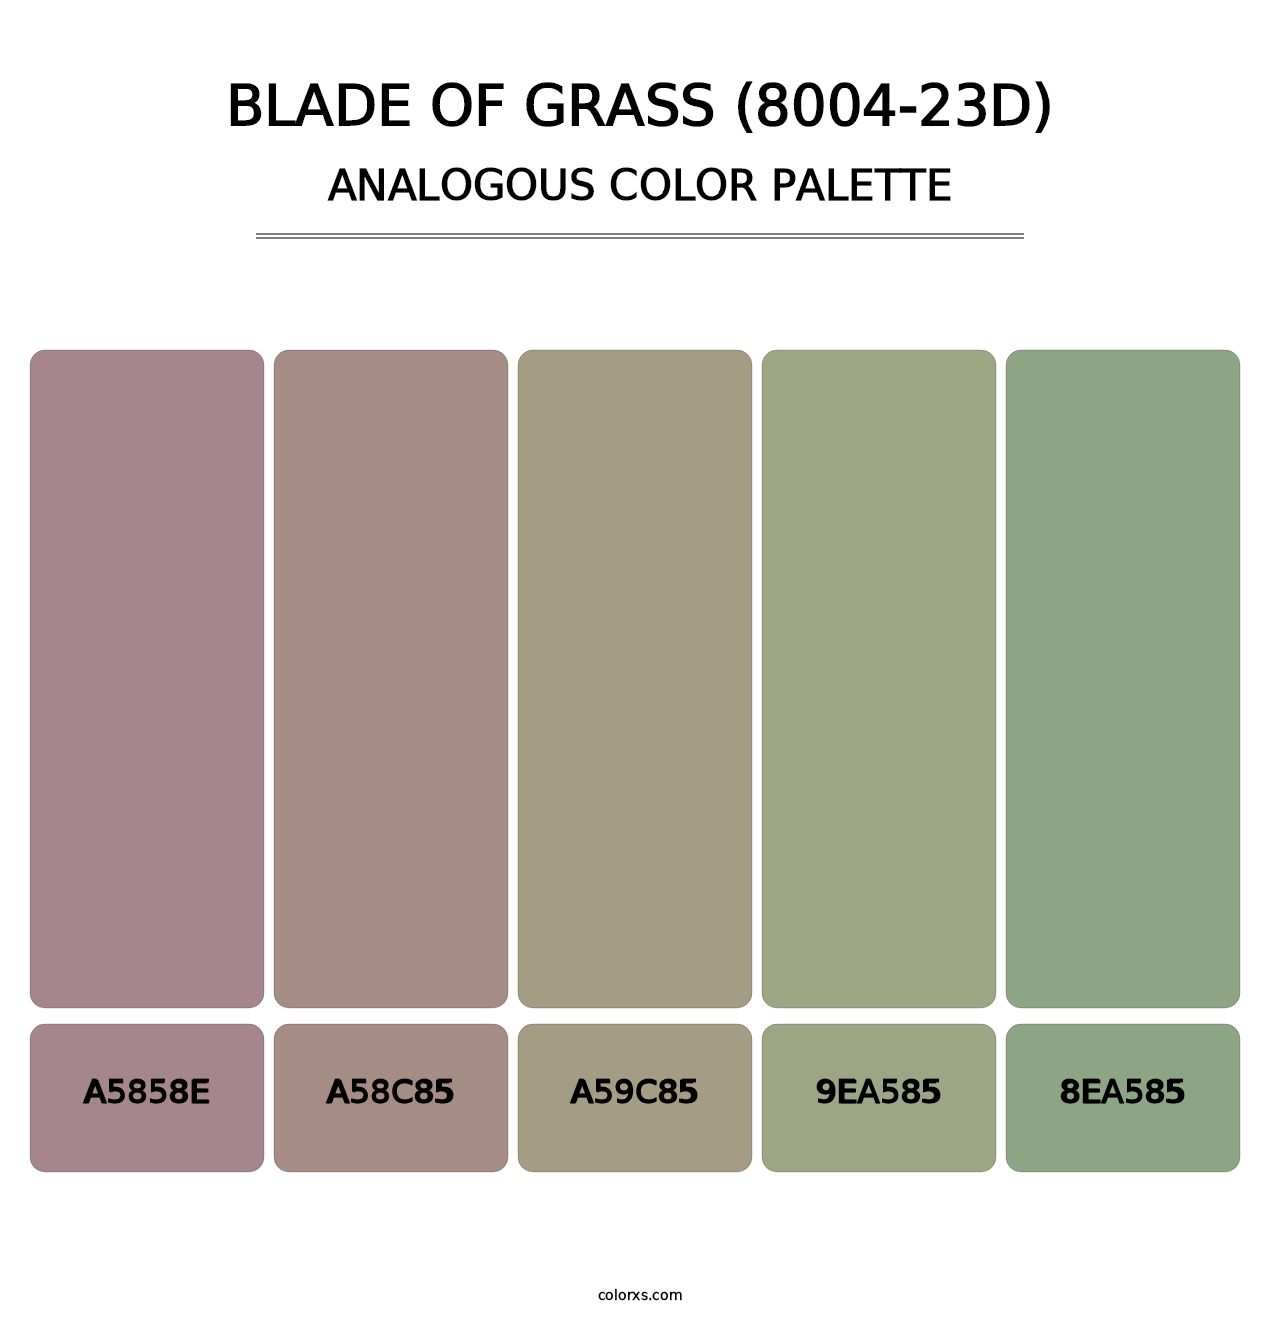 Blade of Grass (8004-23D) - Analogous Color Palette